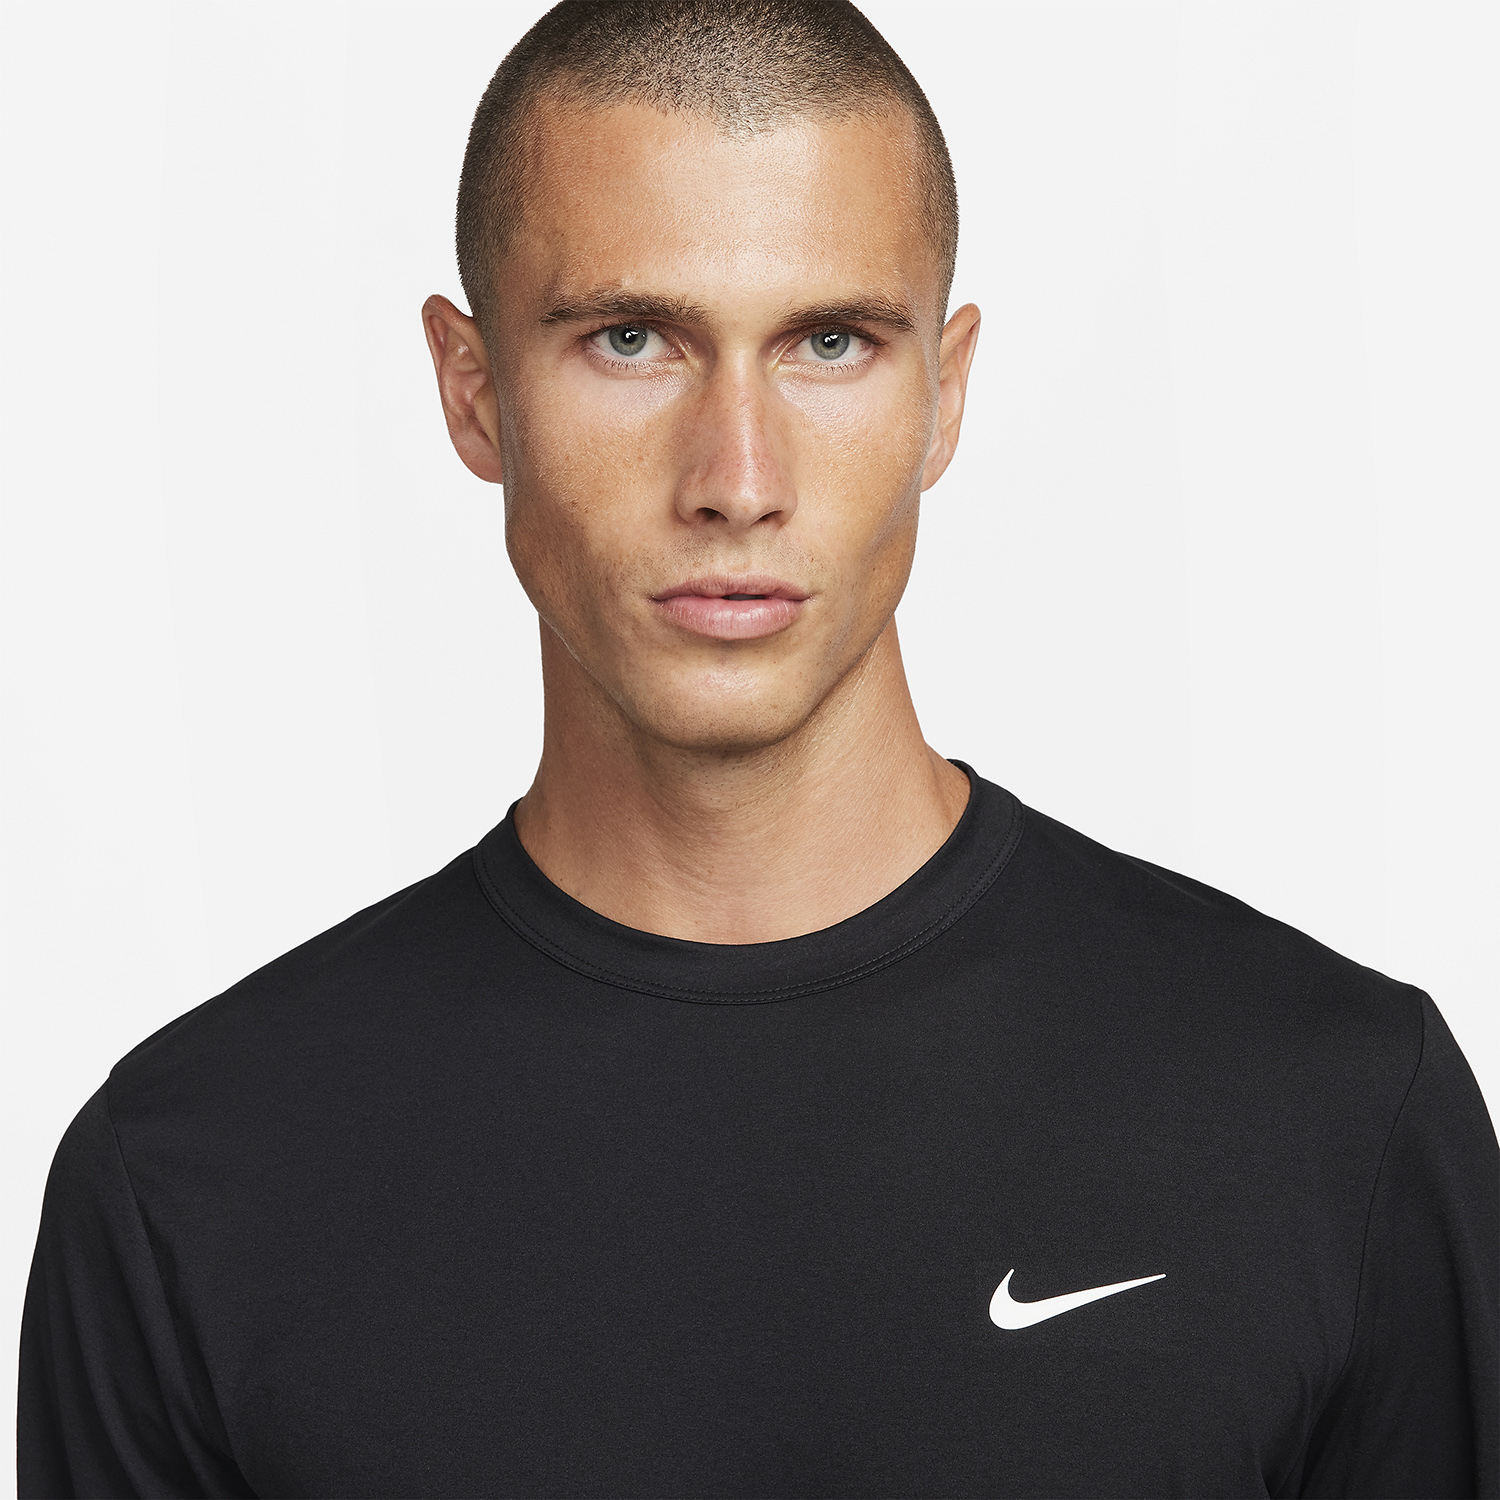 Nike Dri-FIT UV Hyverse Shirt - Black/White